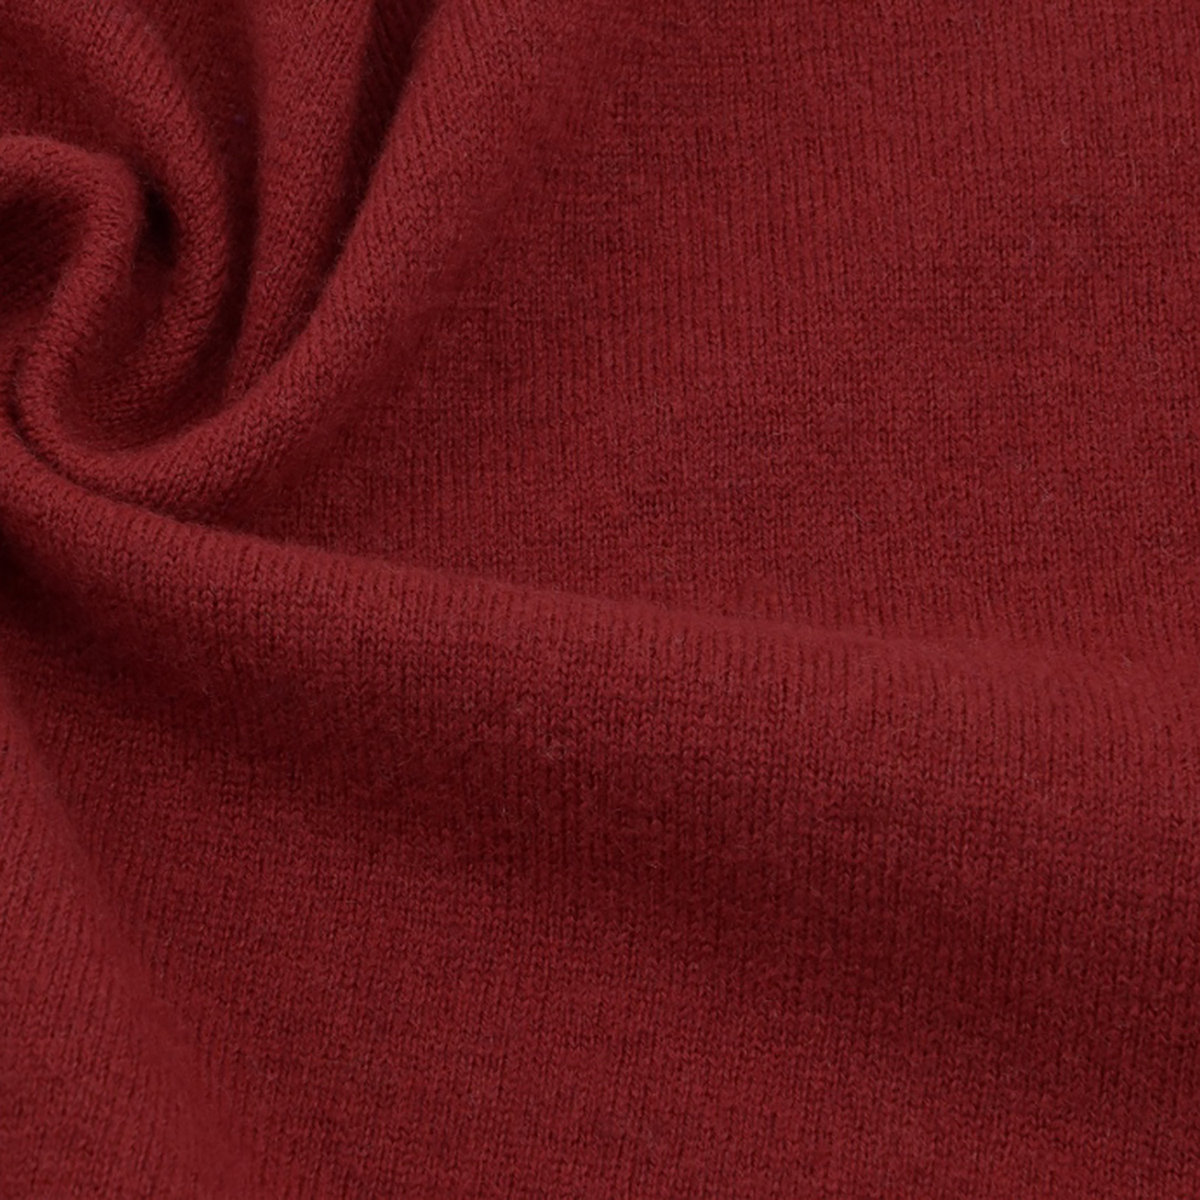 Woolen merino jersey cherry red